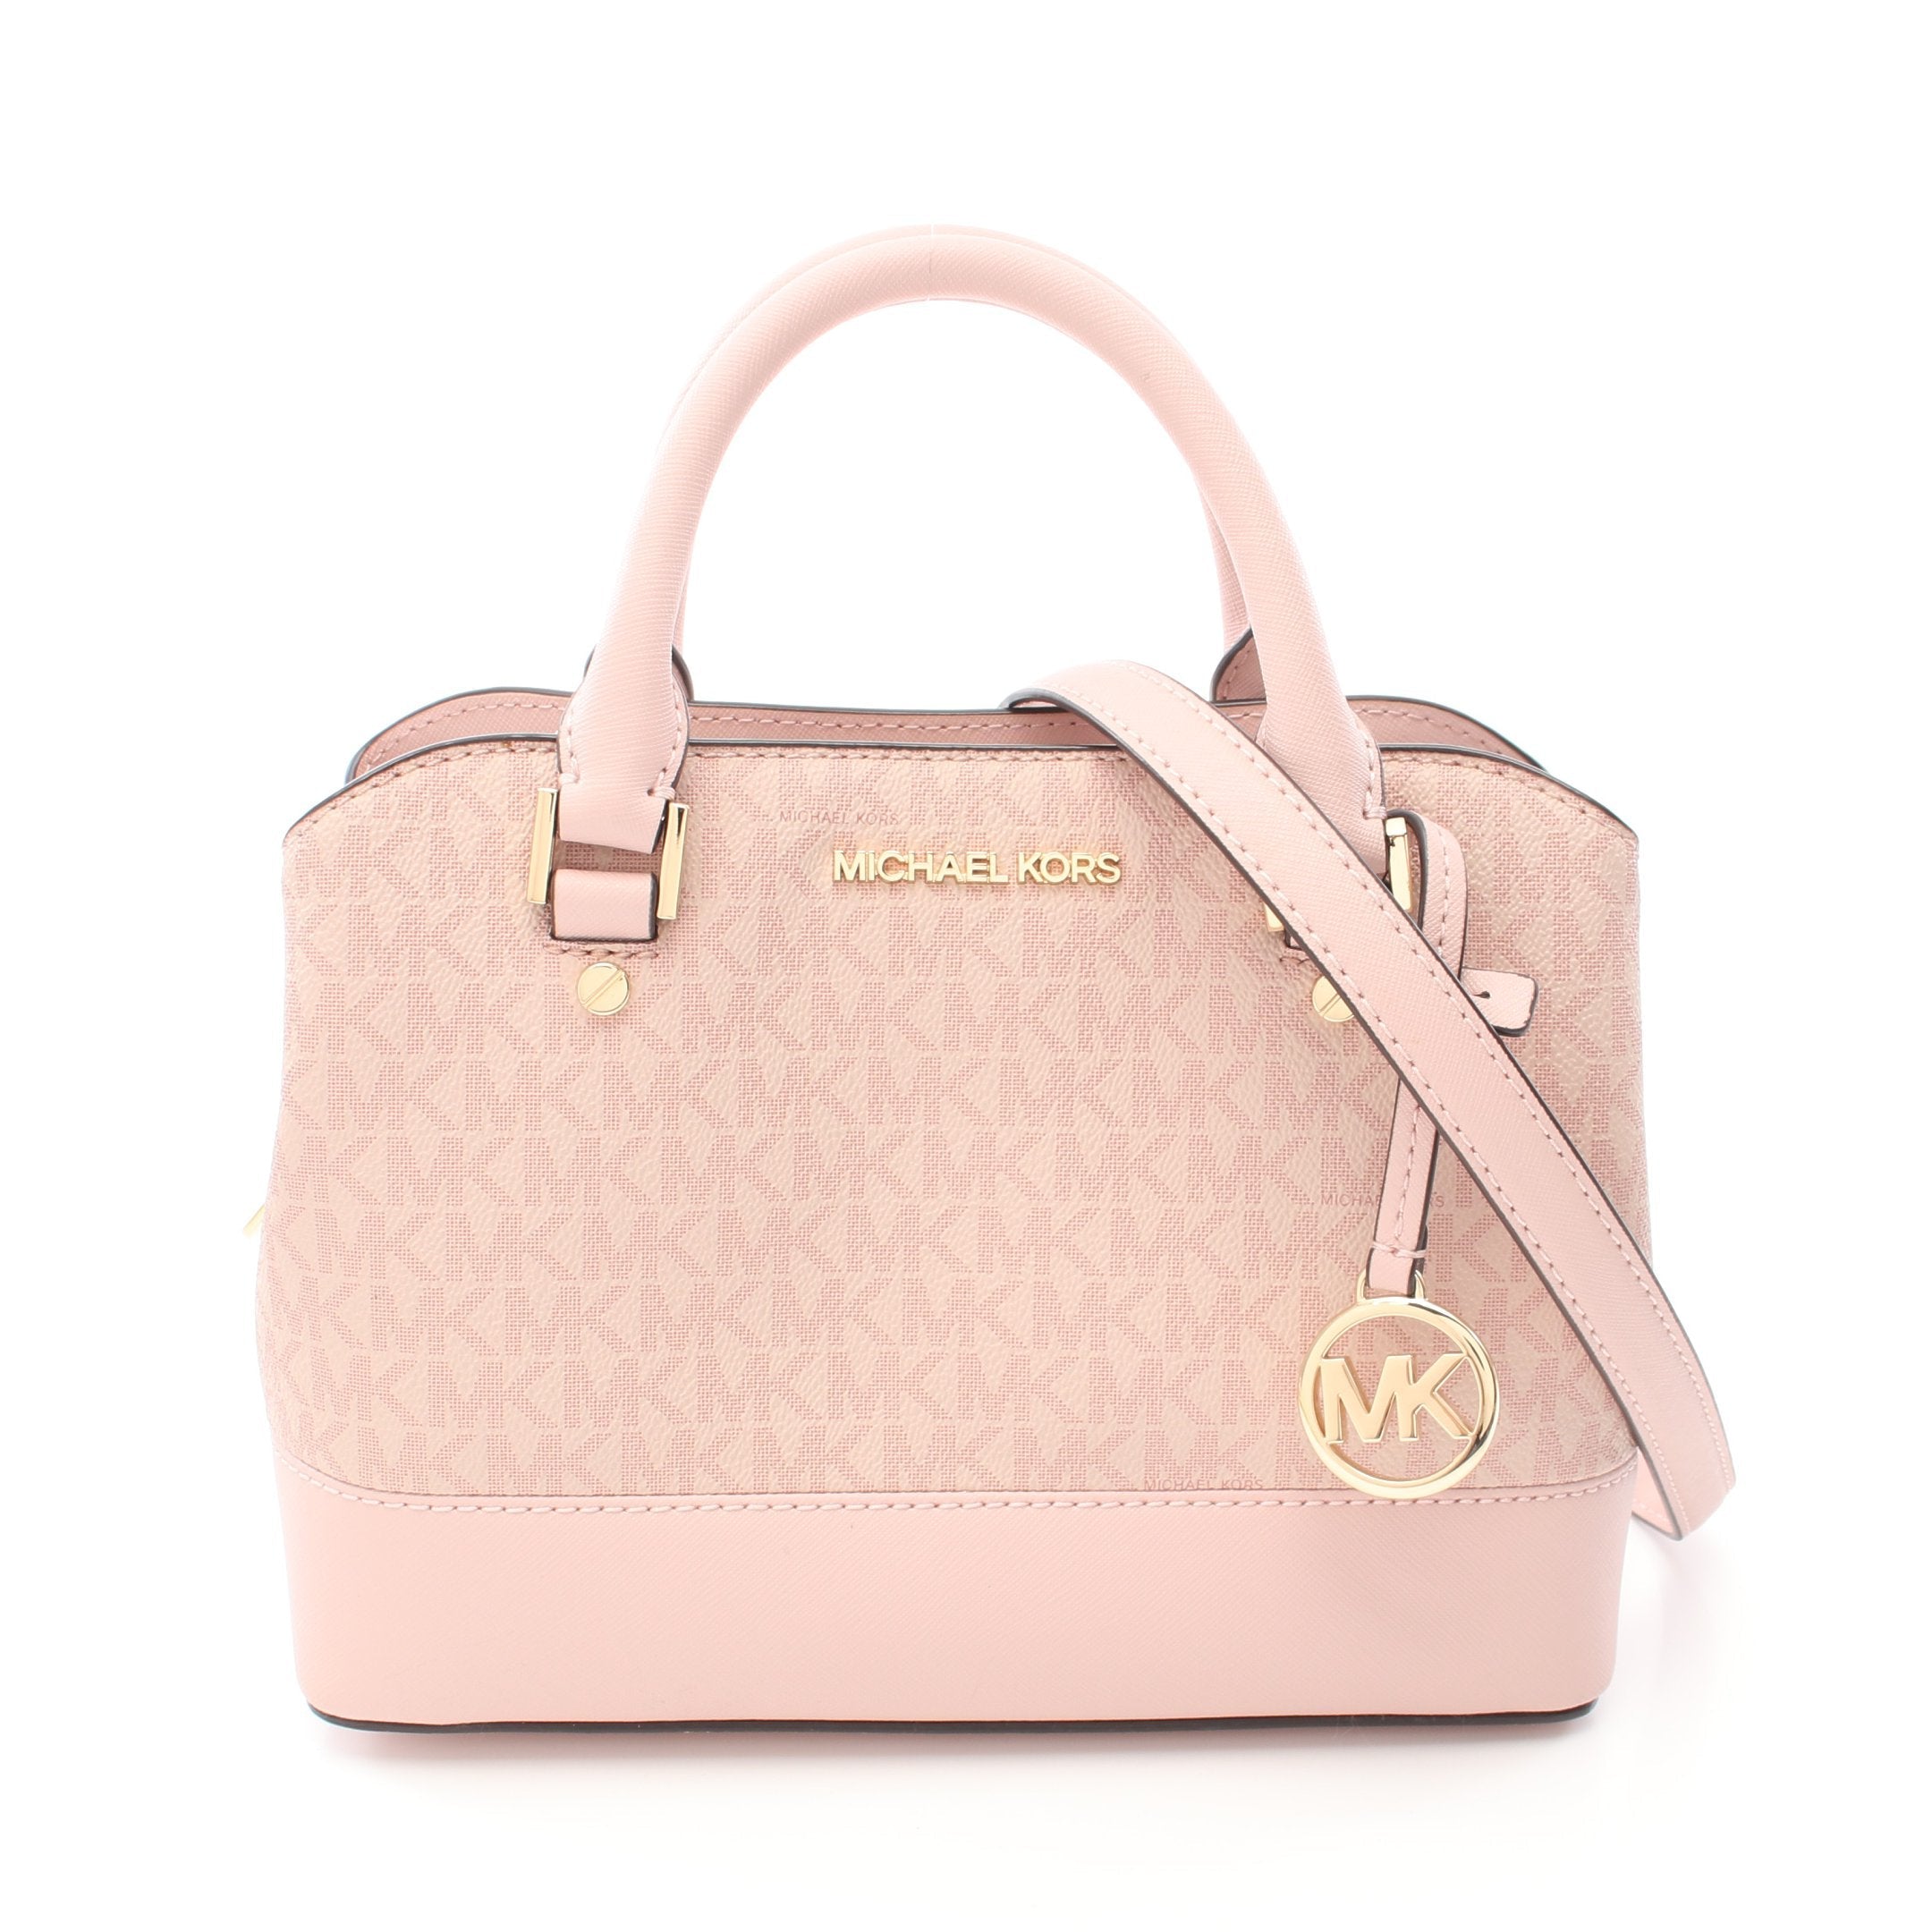 Michael Kors Savannah Signature Small Satchel Handbag Pvc Leather 2way In Pink